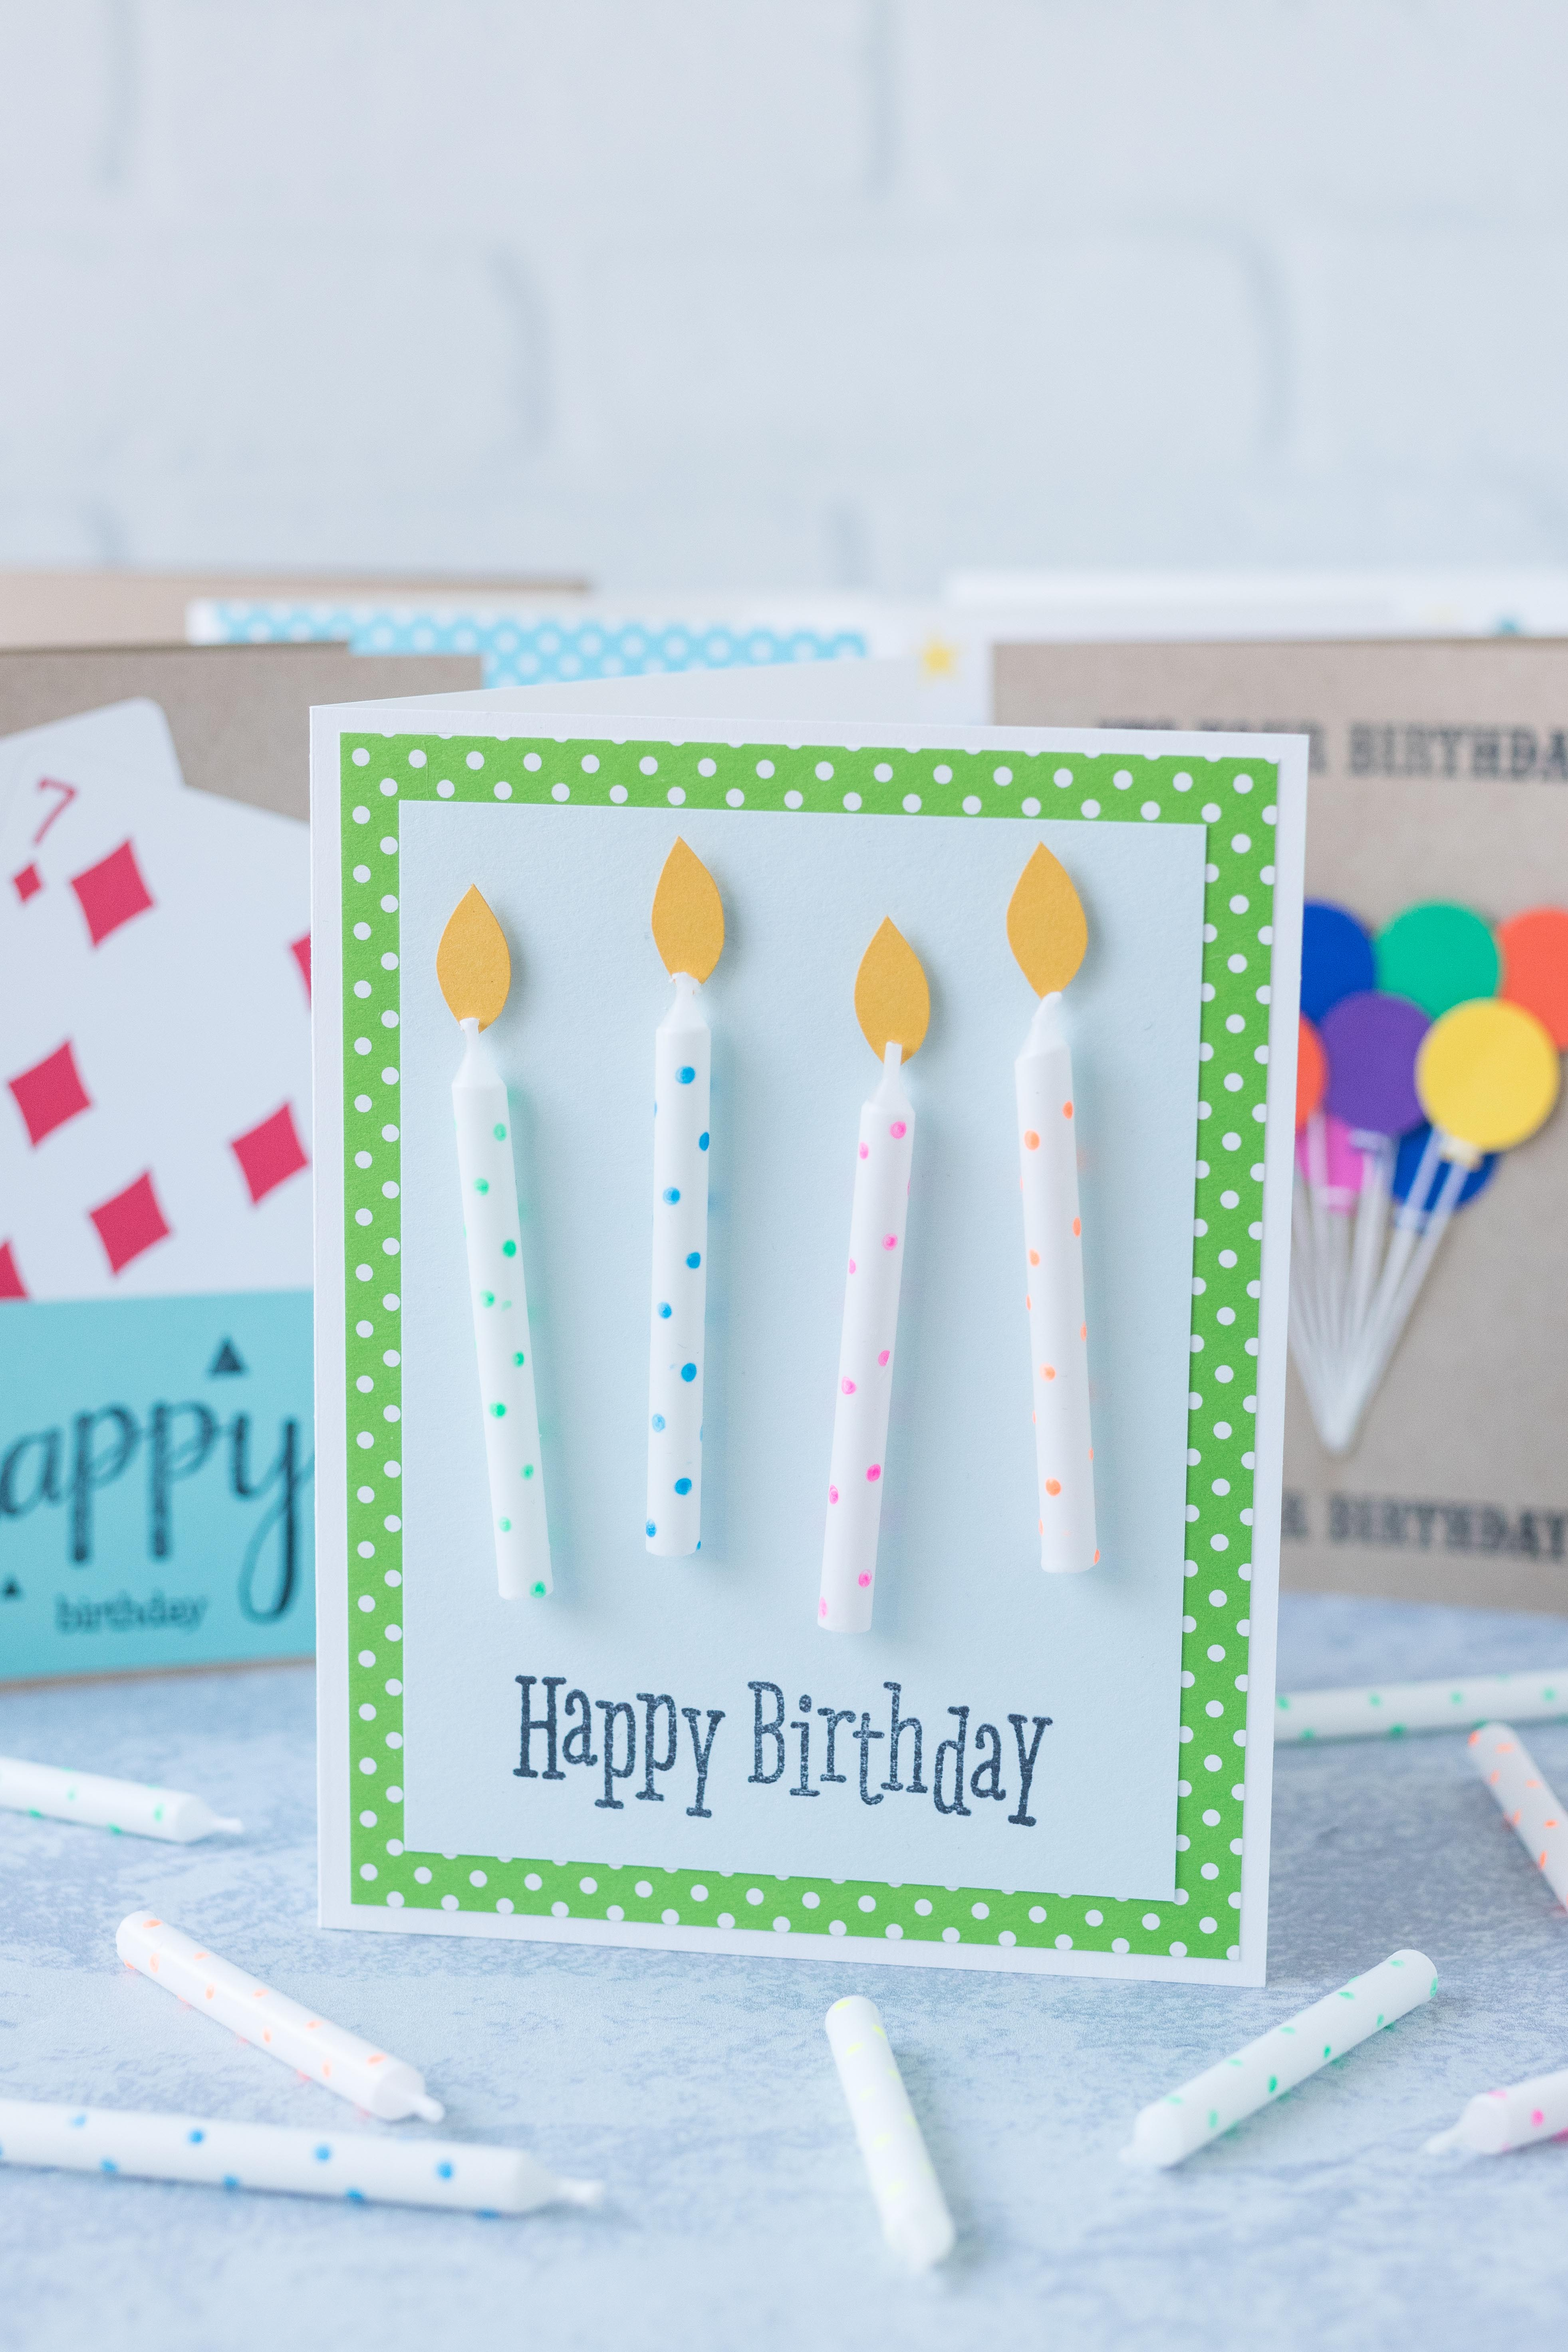 Happy Birthday Cards Ideas 10 Simple Diy Birthday Cards Rose Clearfield